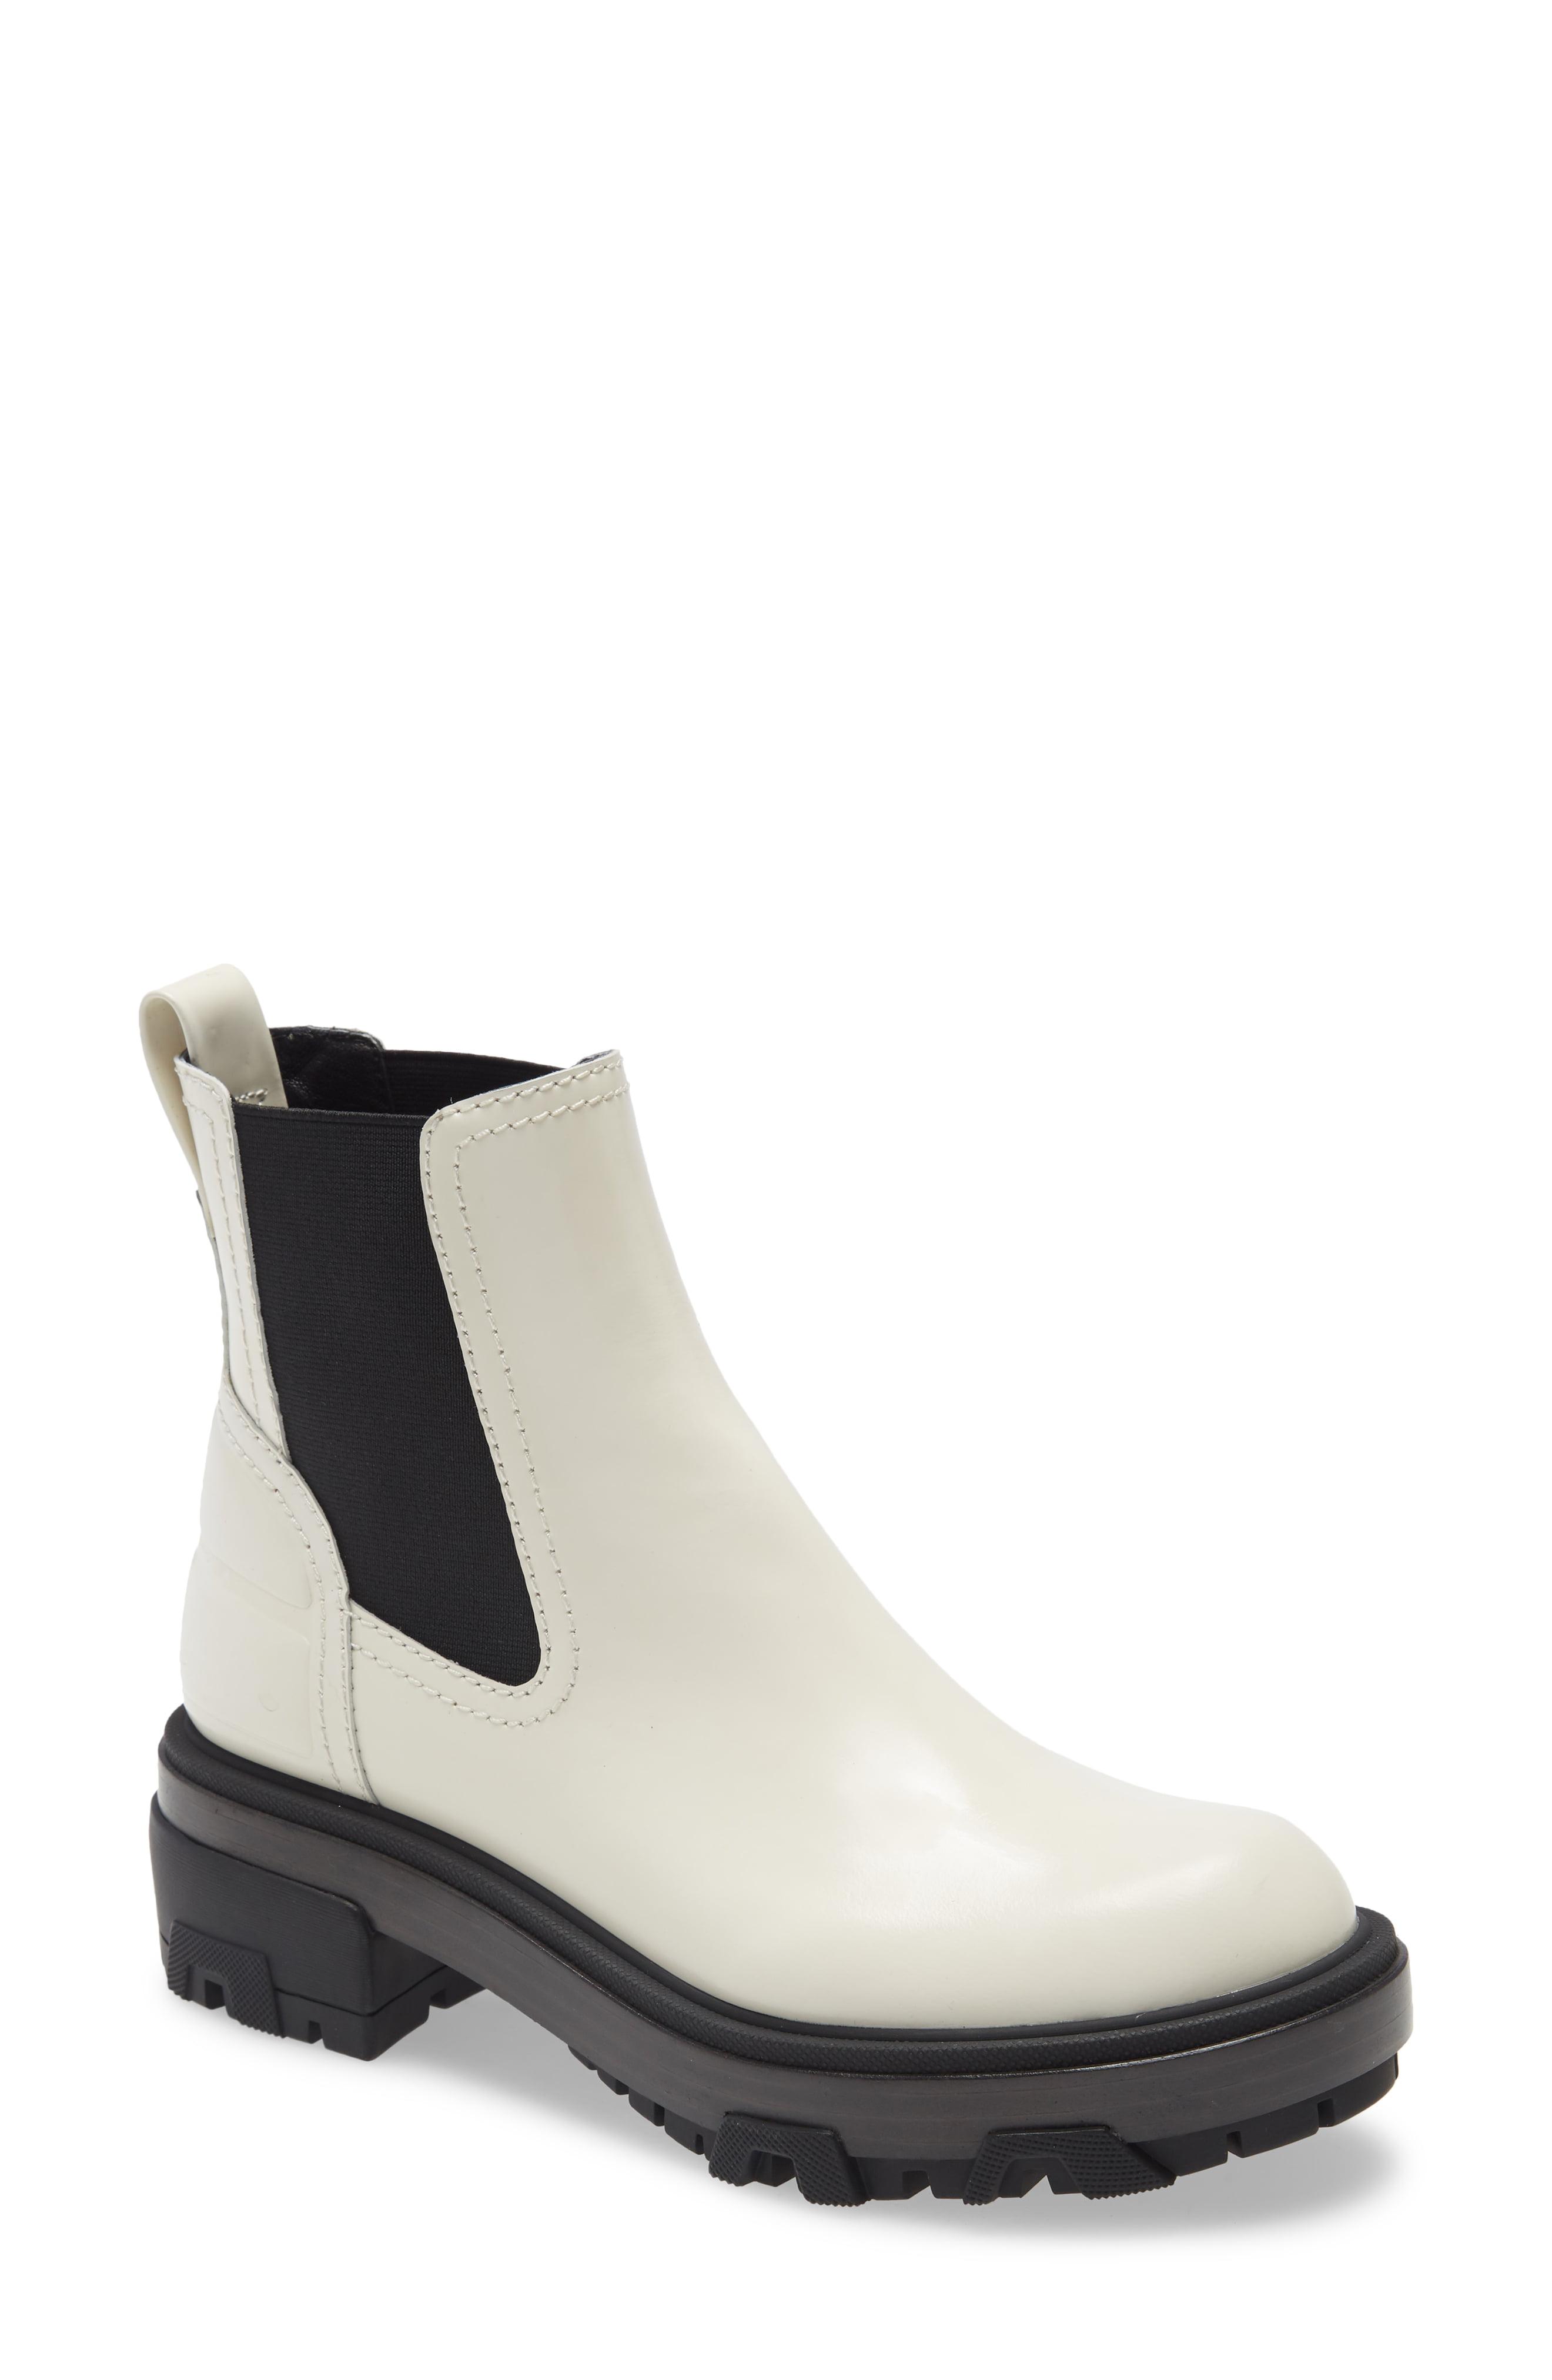 Rag & Bone Shaye Lug Sole Chelsea Boot in Antique White (White) - Lyst